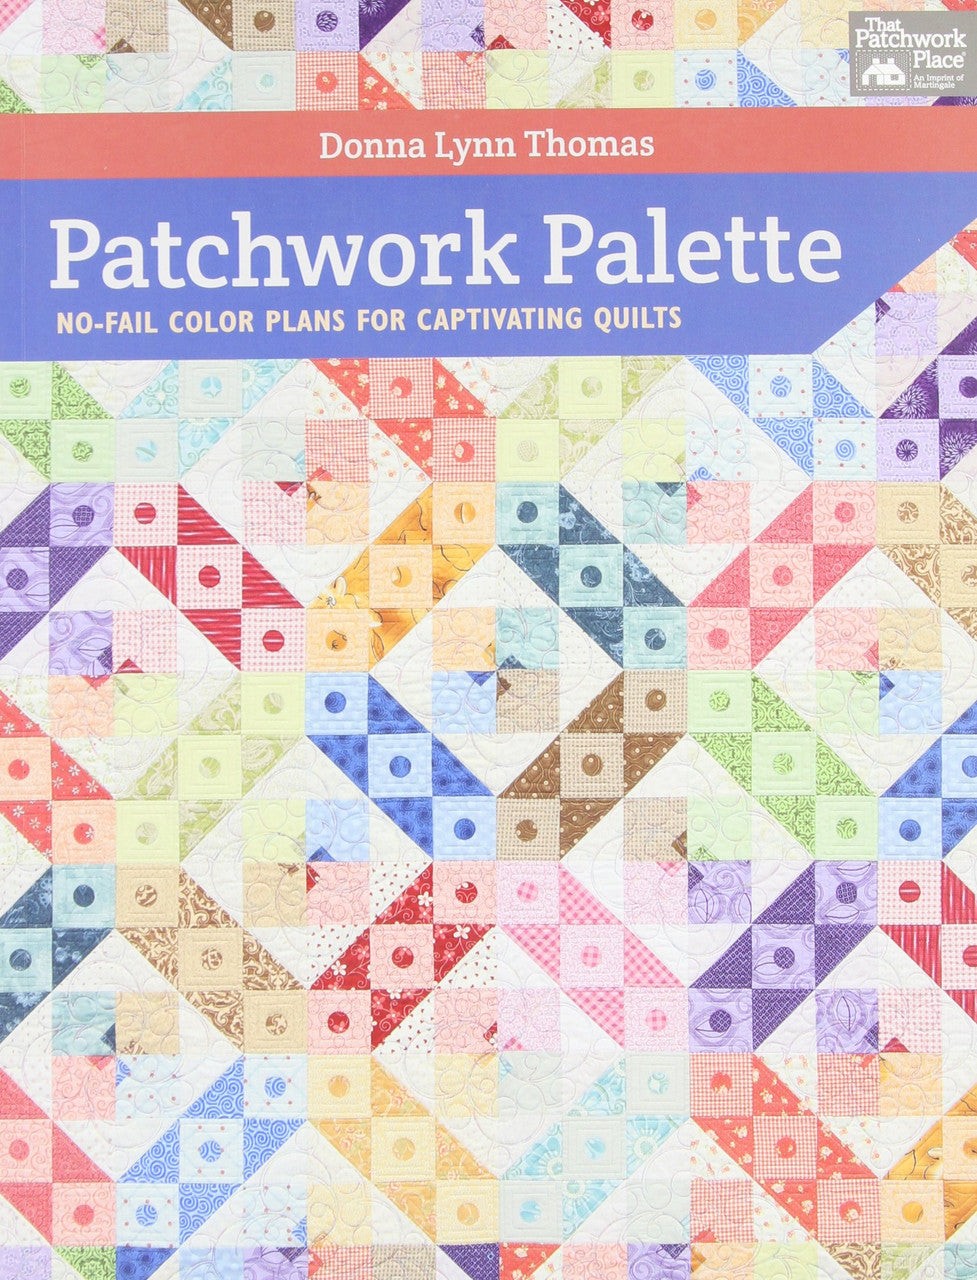 Patchwork Palette Book by Donna Lynn Thomas